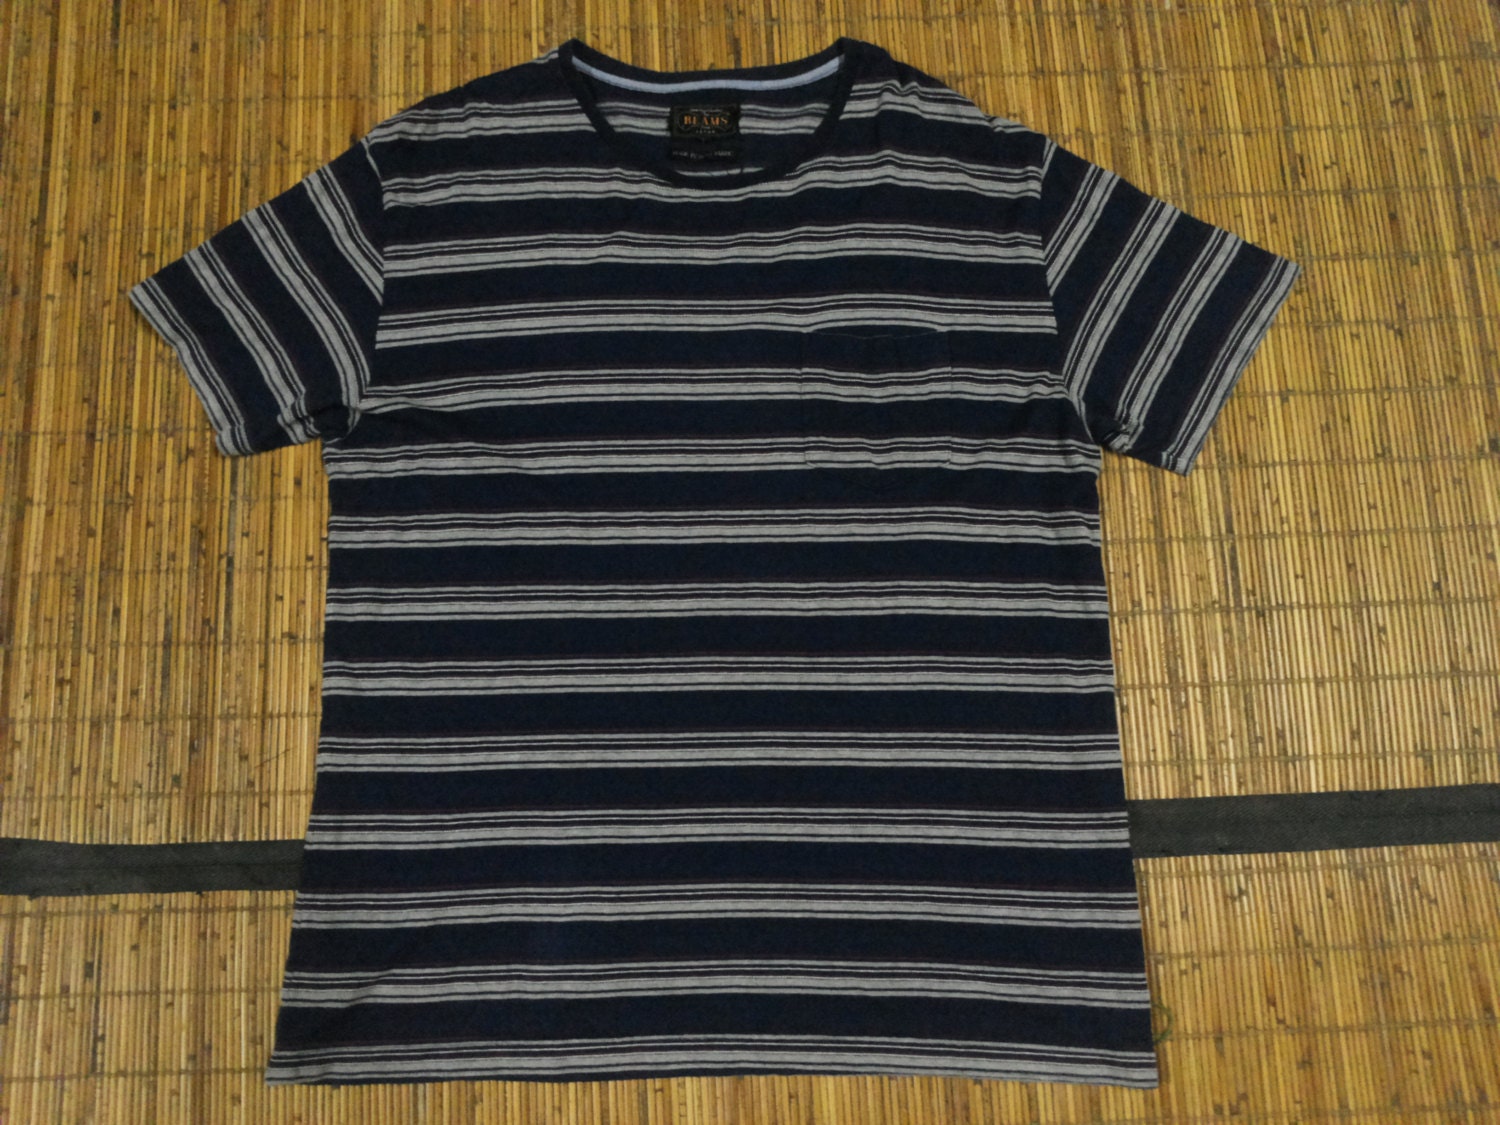 Vintage BEAMS Japan Street Wear Brand Striped Stripes T-Shirt